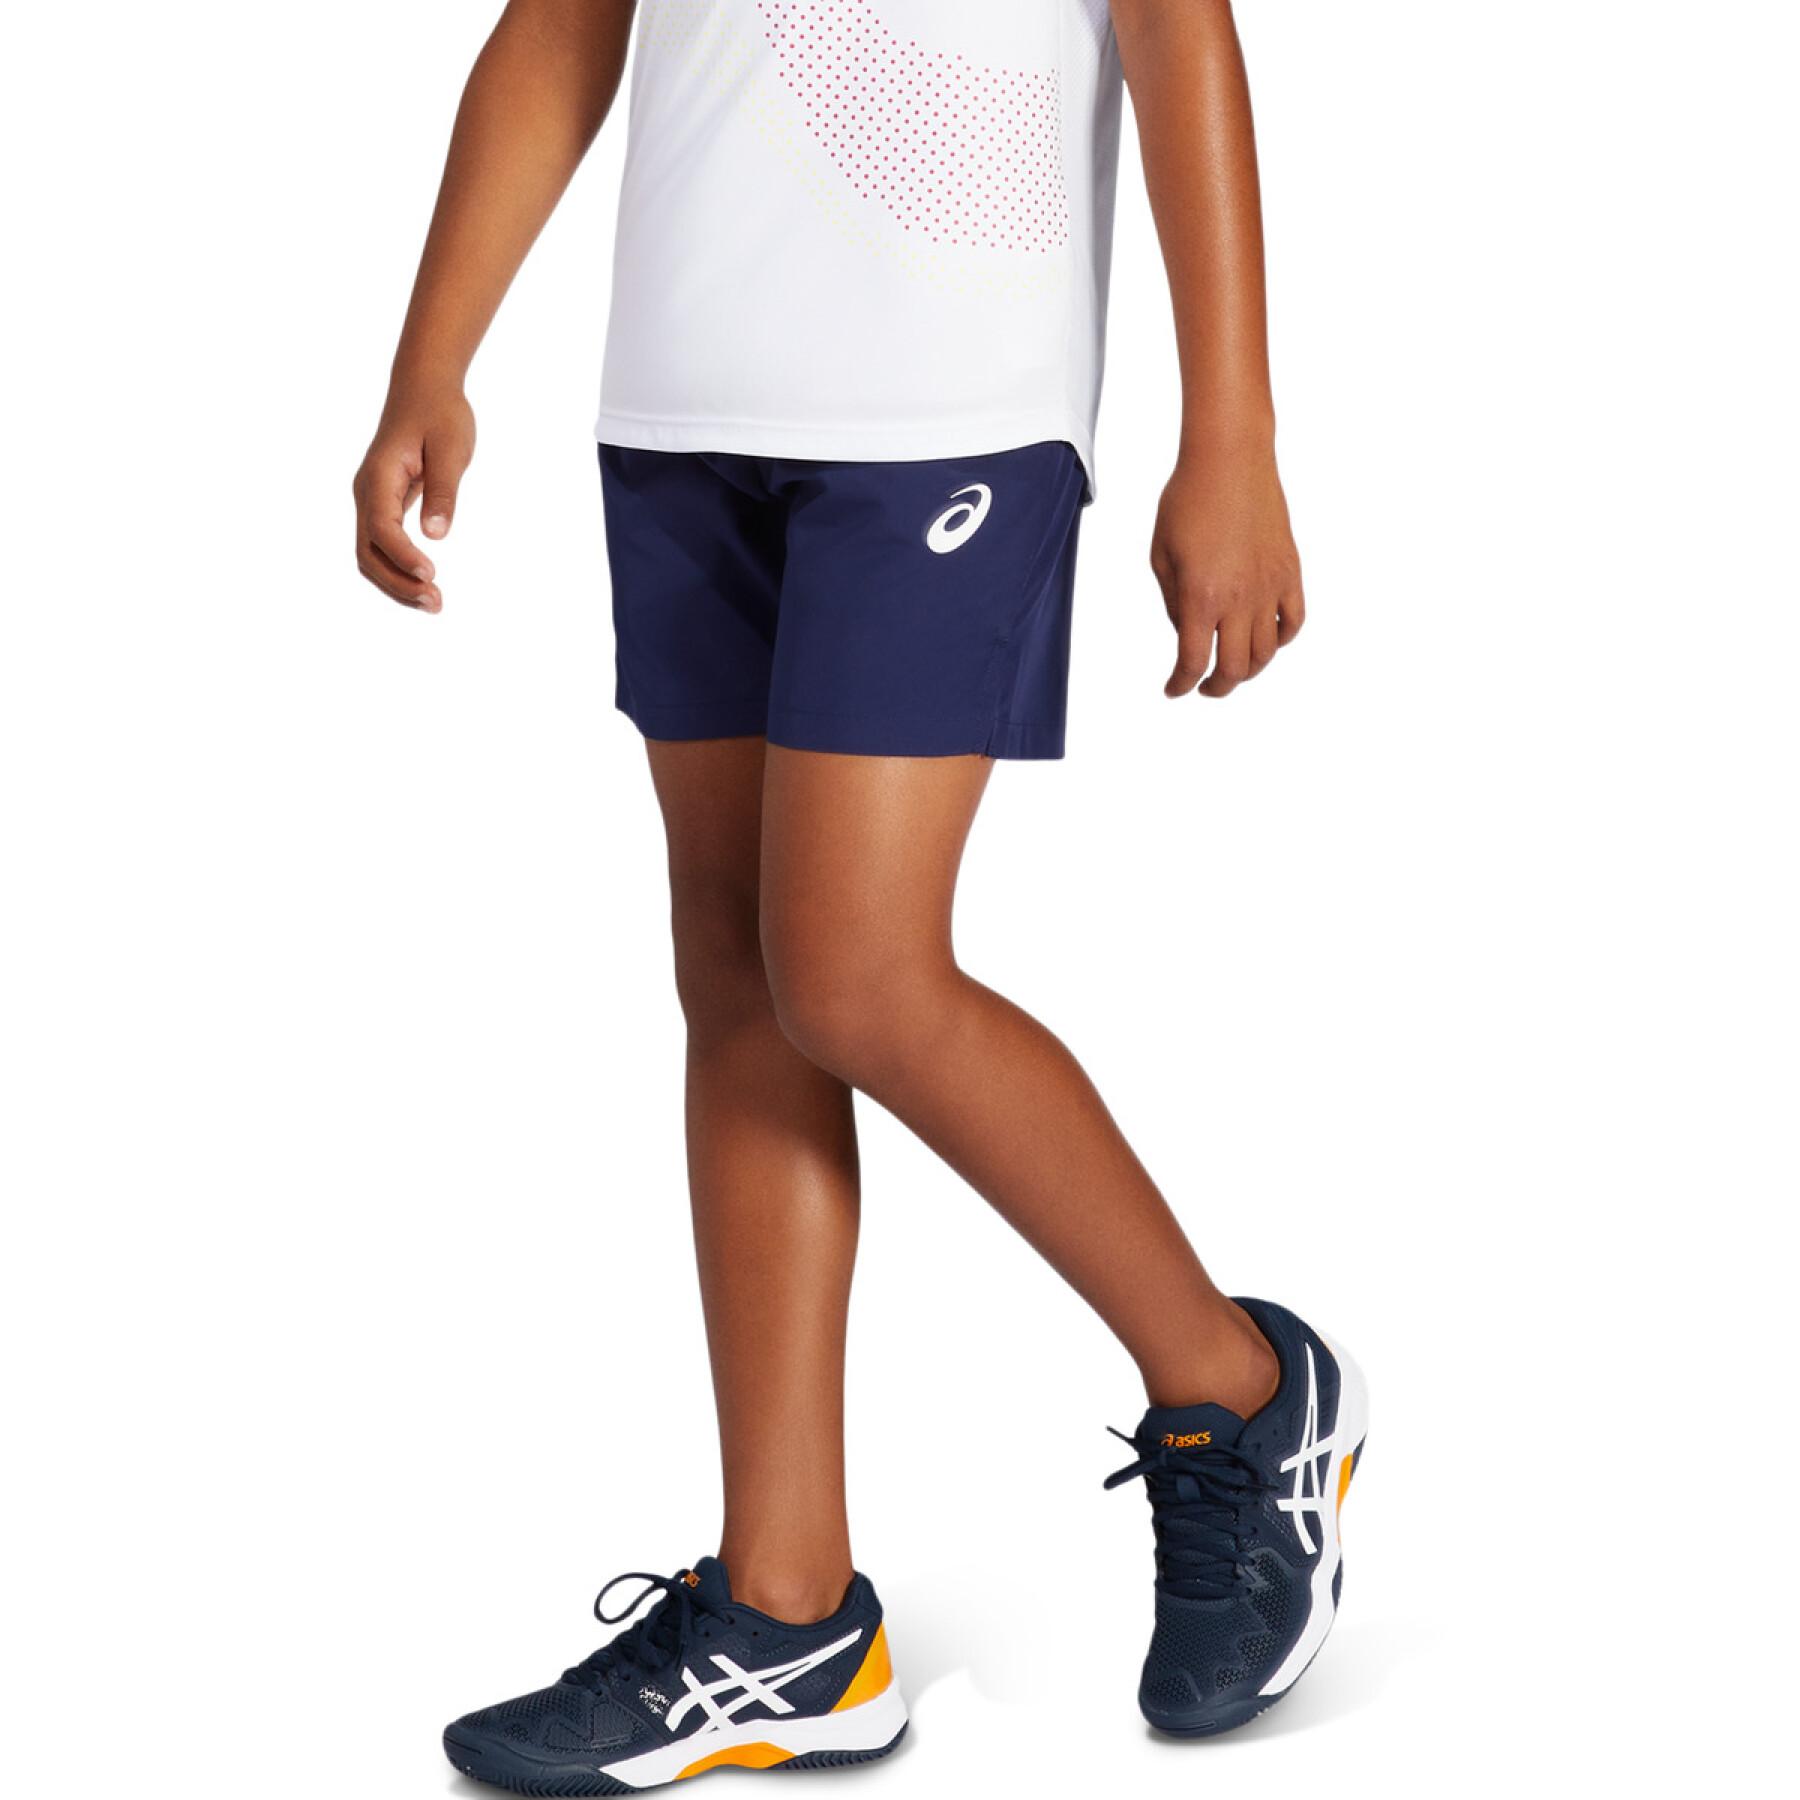 Kinder shorts Asics Tennis B